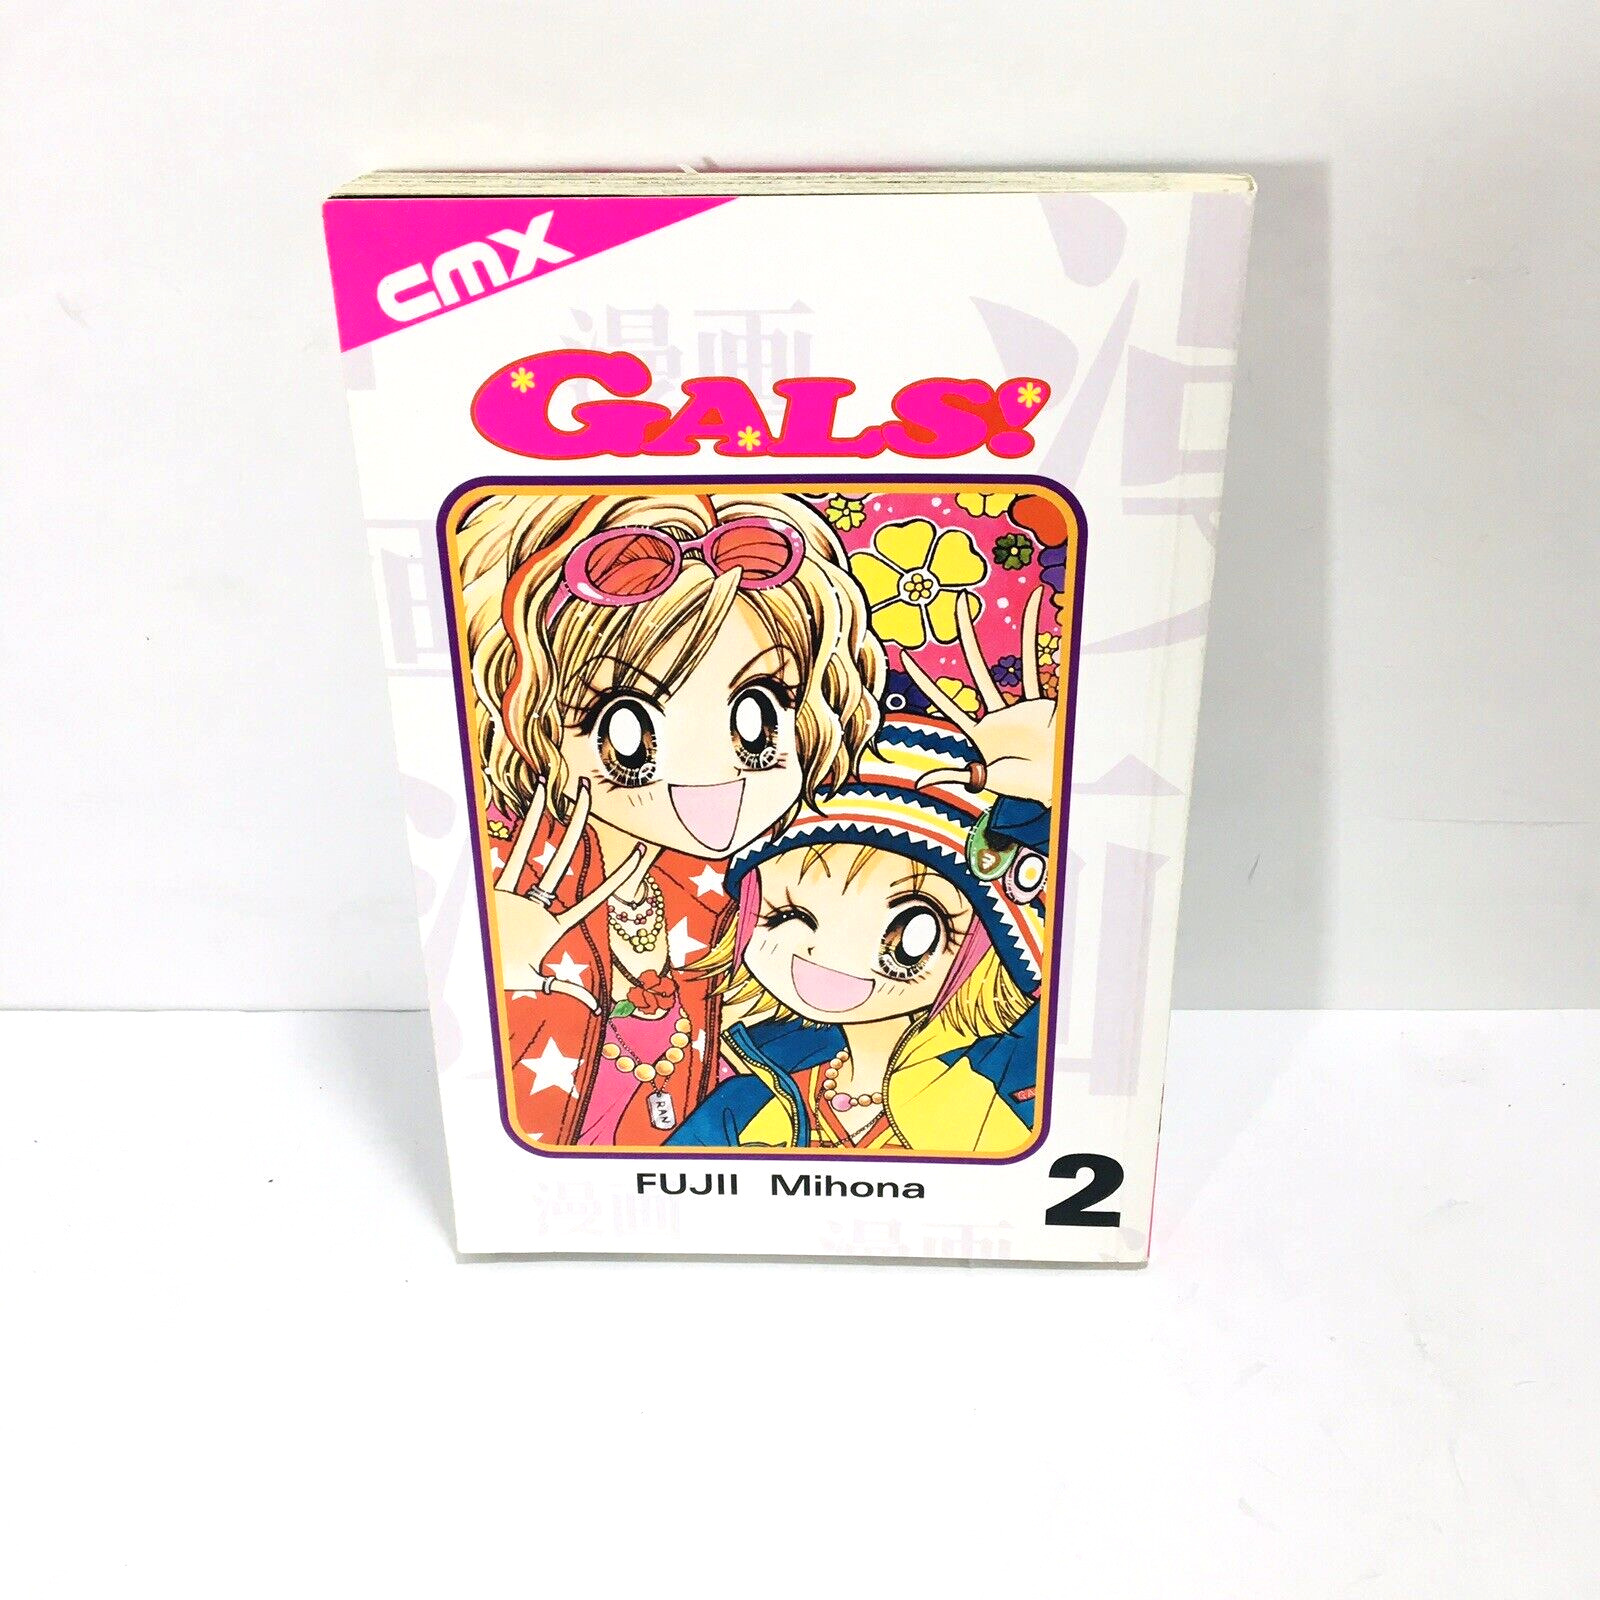 Gals Volume 2 English Manga Mihona Fujii 2006 CMX OOP